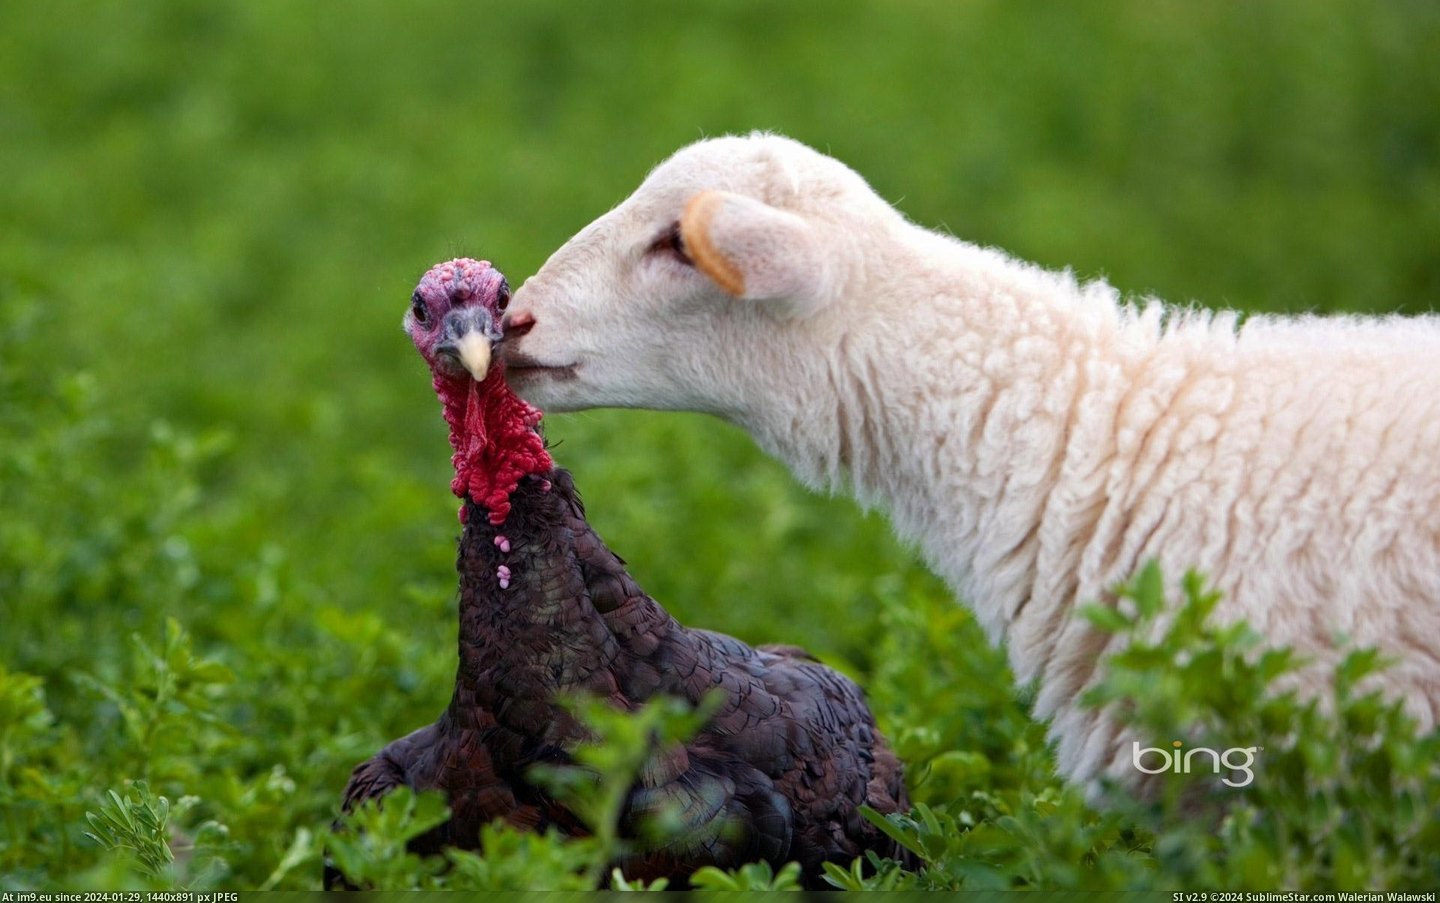 A lamb gives a turkey a kiss on a farm in Lindsborg, Kansas (in Bing Photos November 2012)